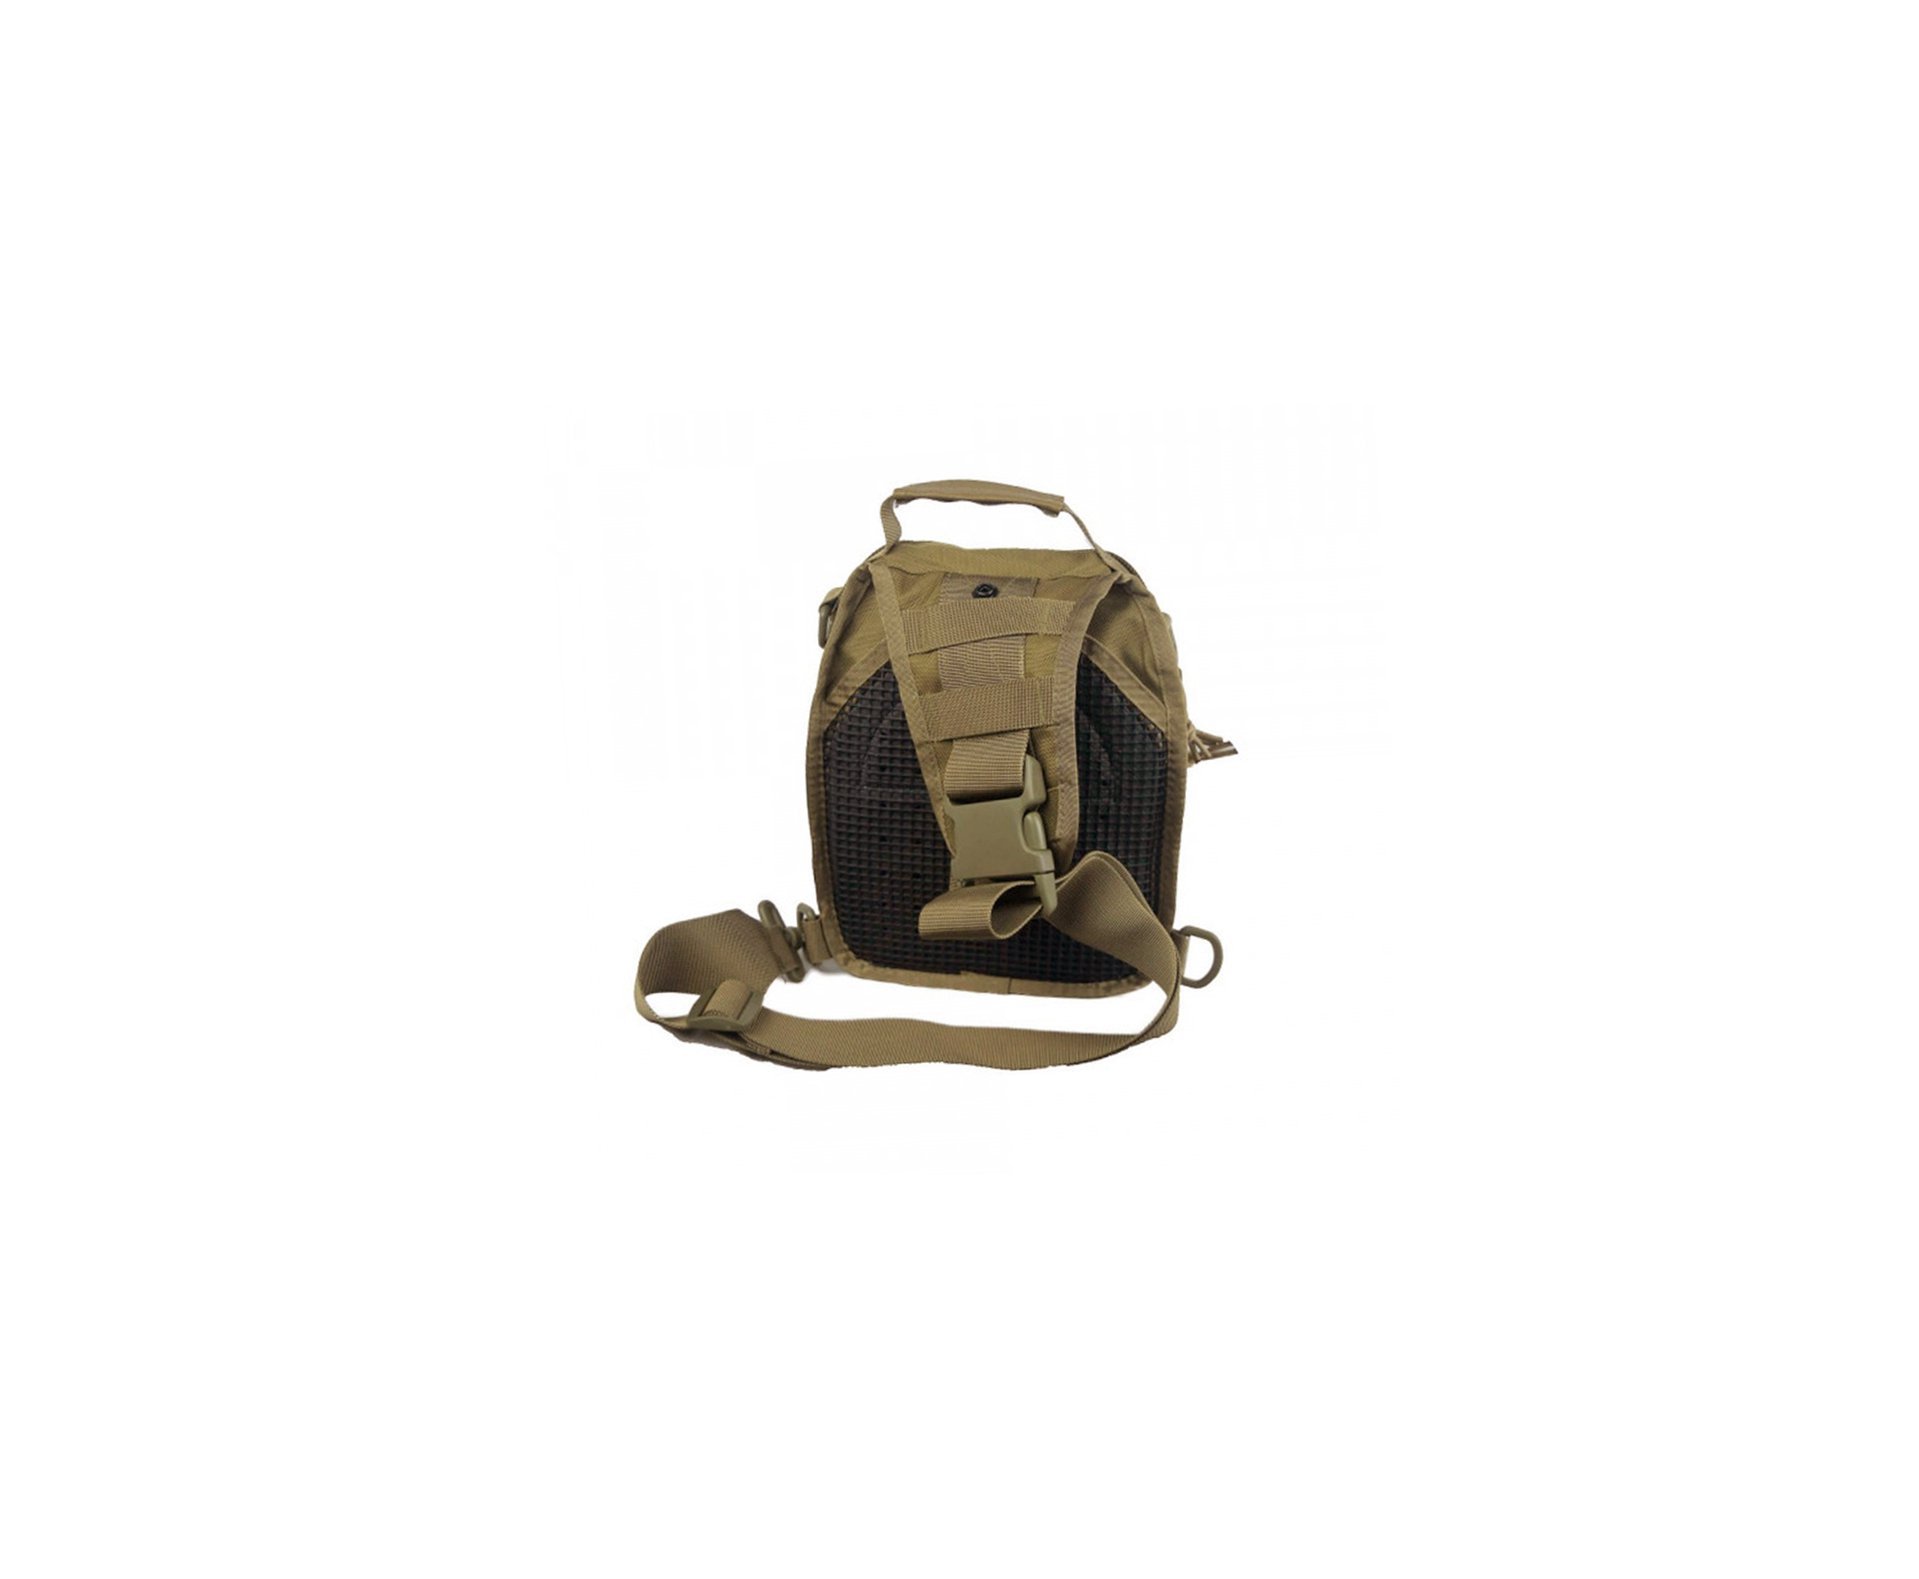 Bolsa Tatica Pentagon Ucb Shoulder Bag - Areia - Evo Tactical